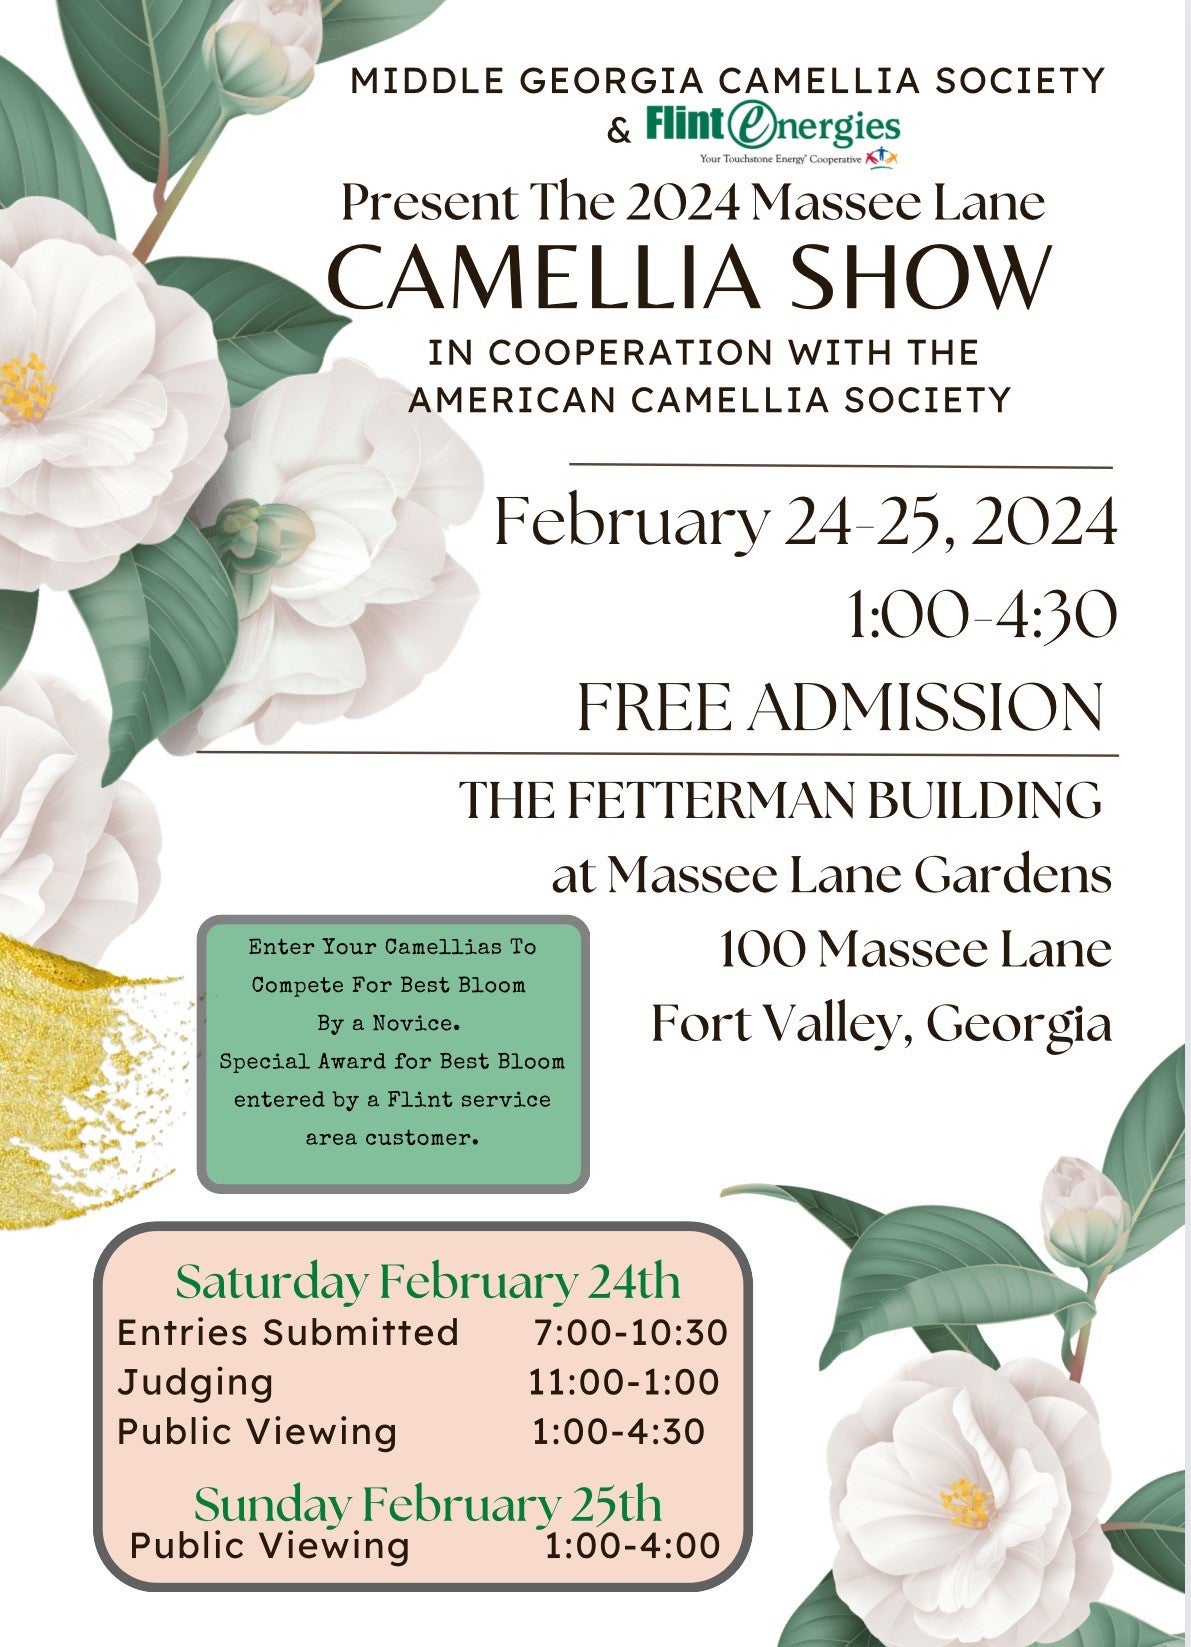 Camellia Show at Massee Lane